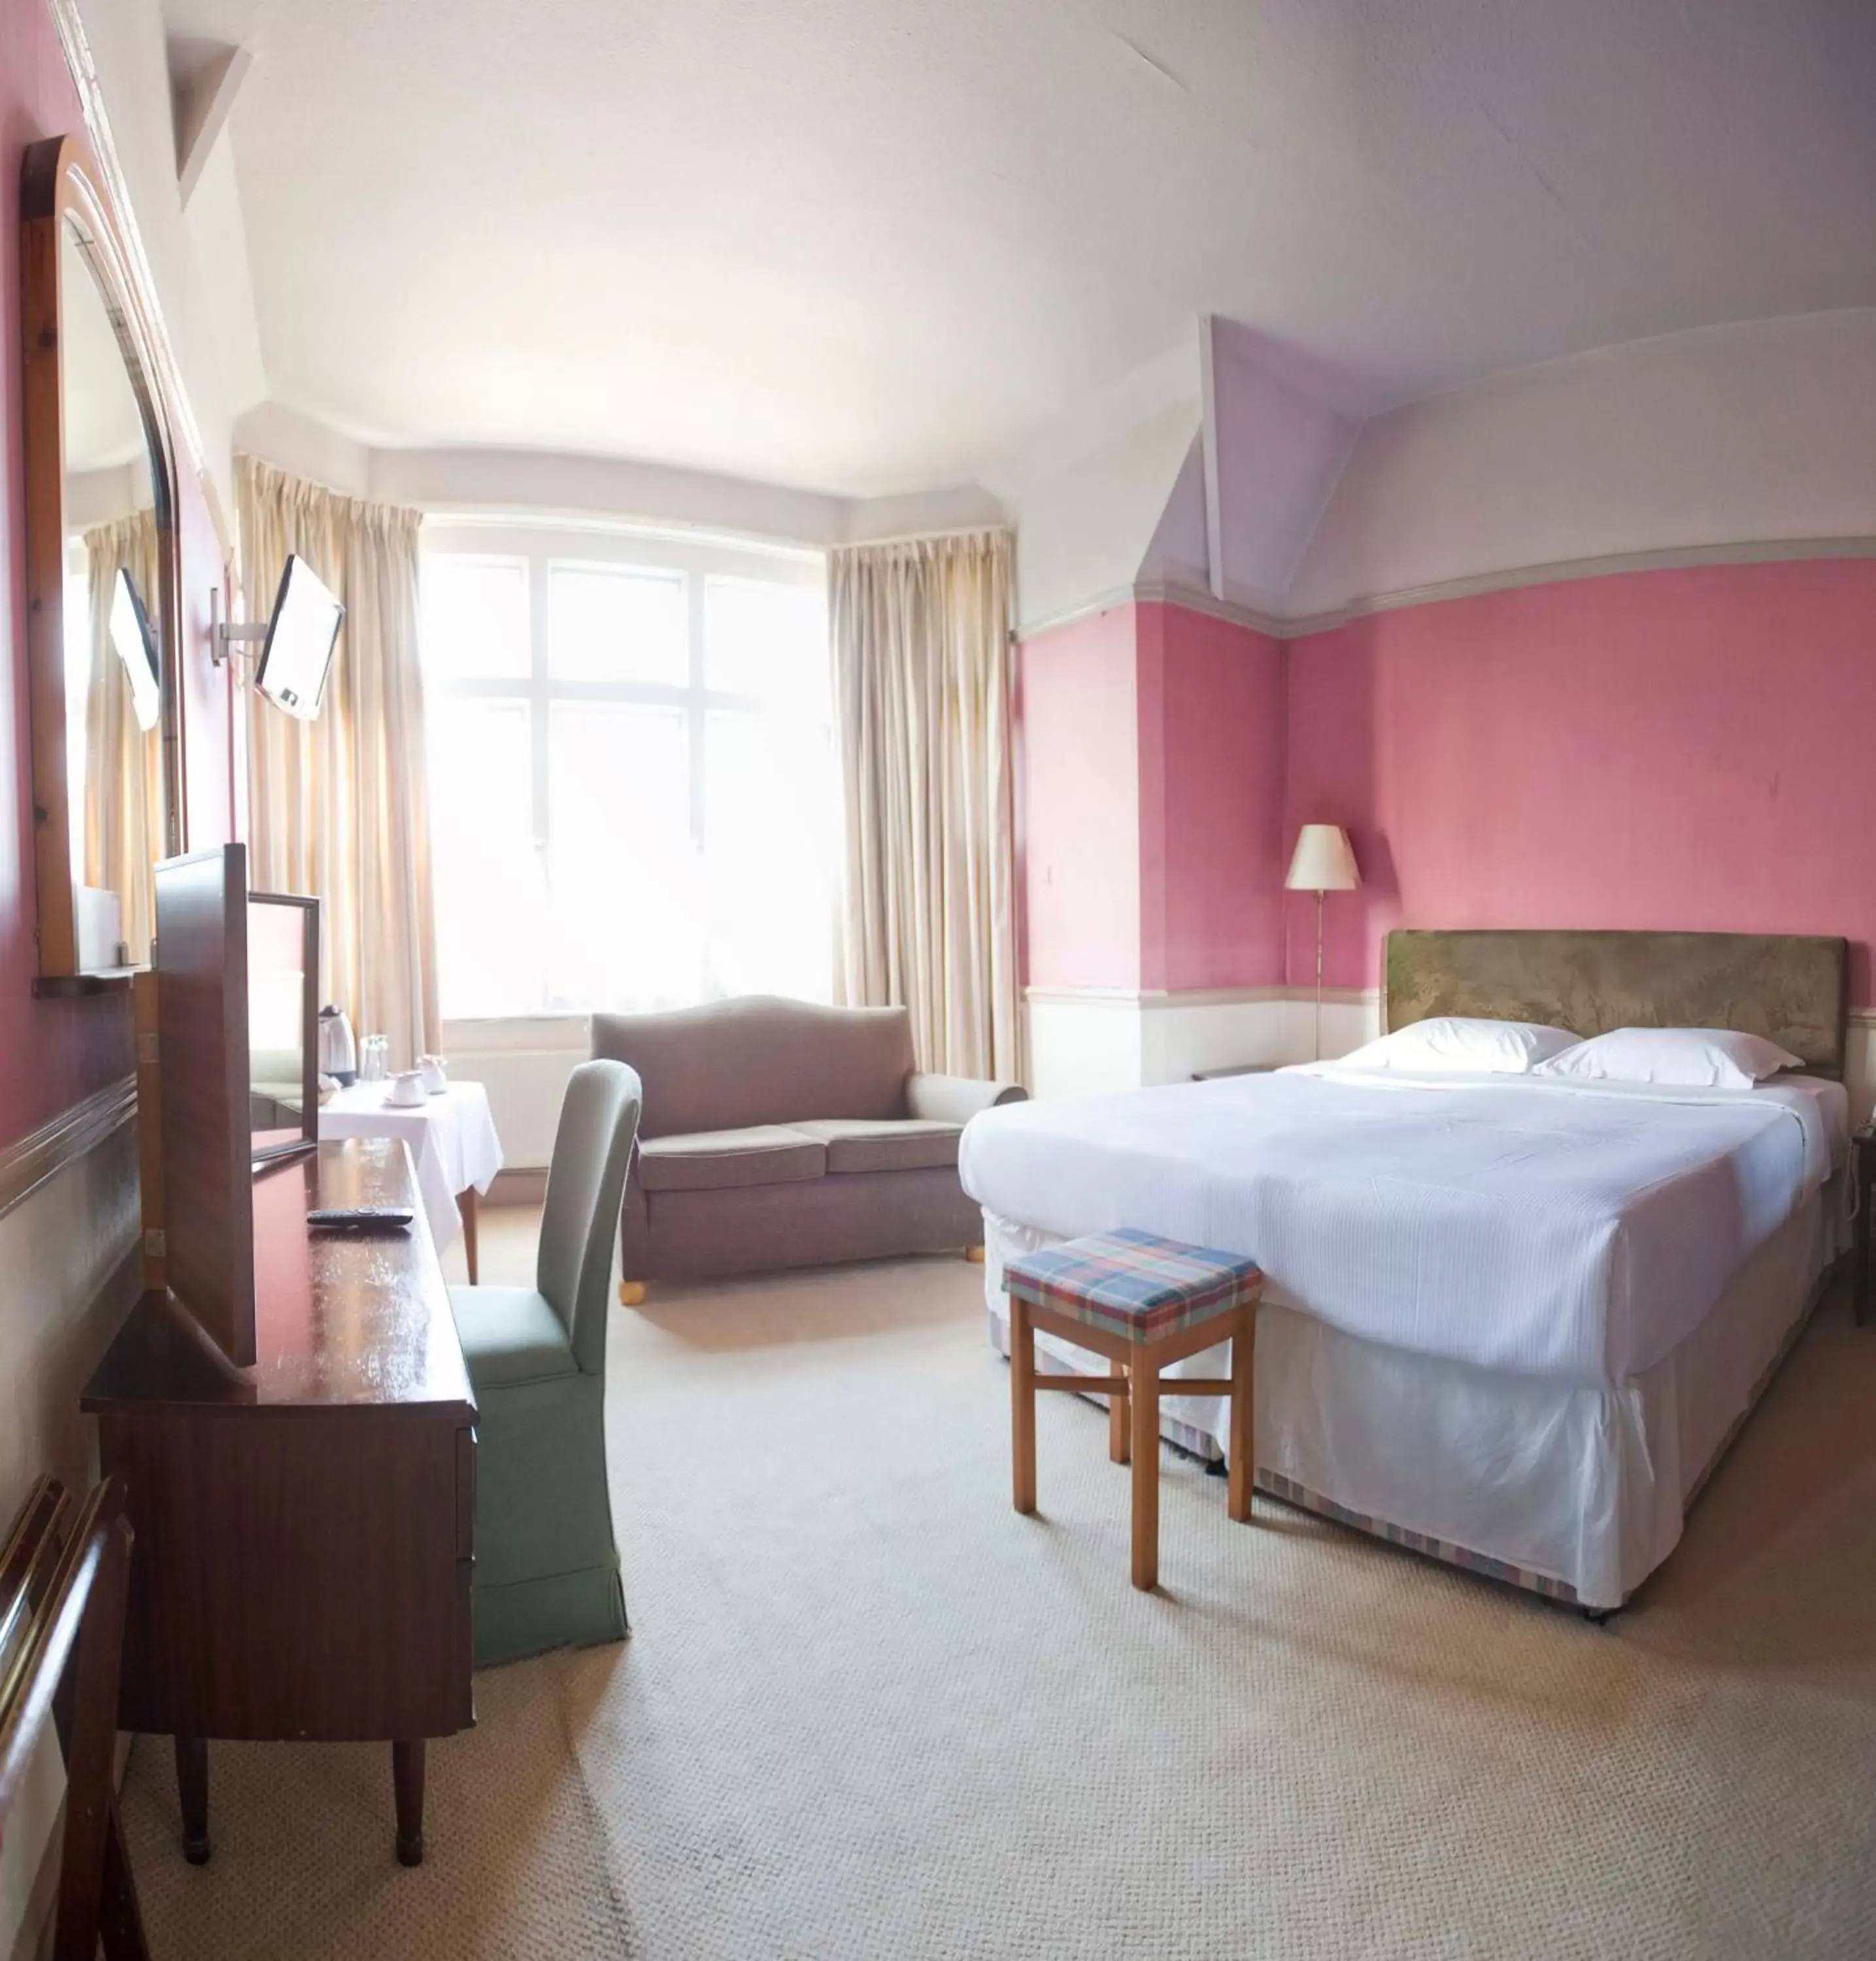 Bedroom in Tree Hotel at Iffley